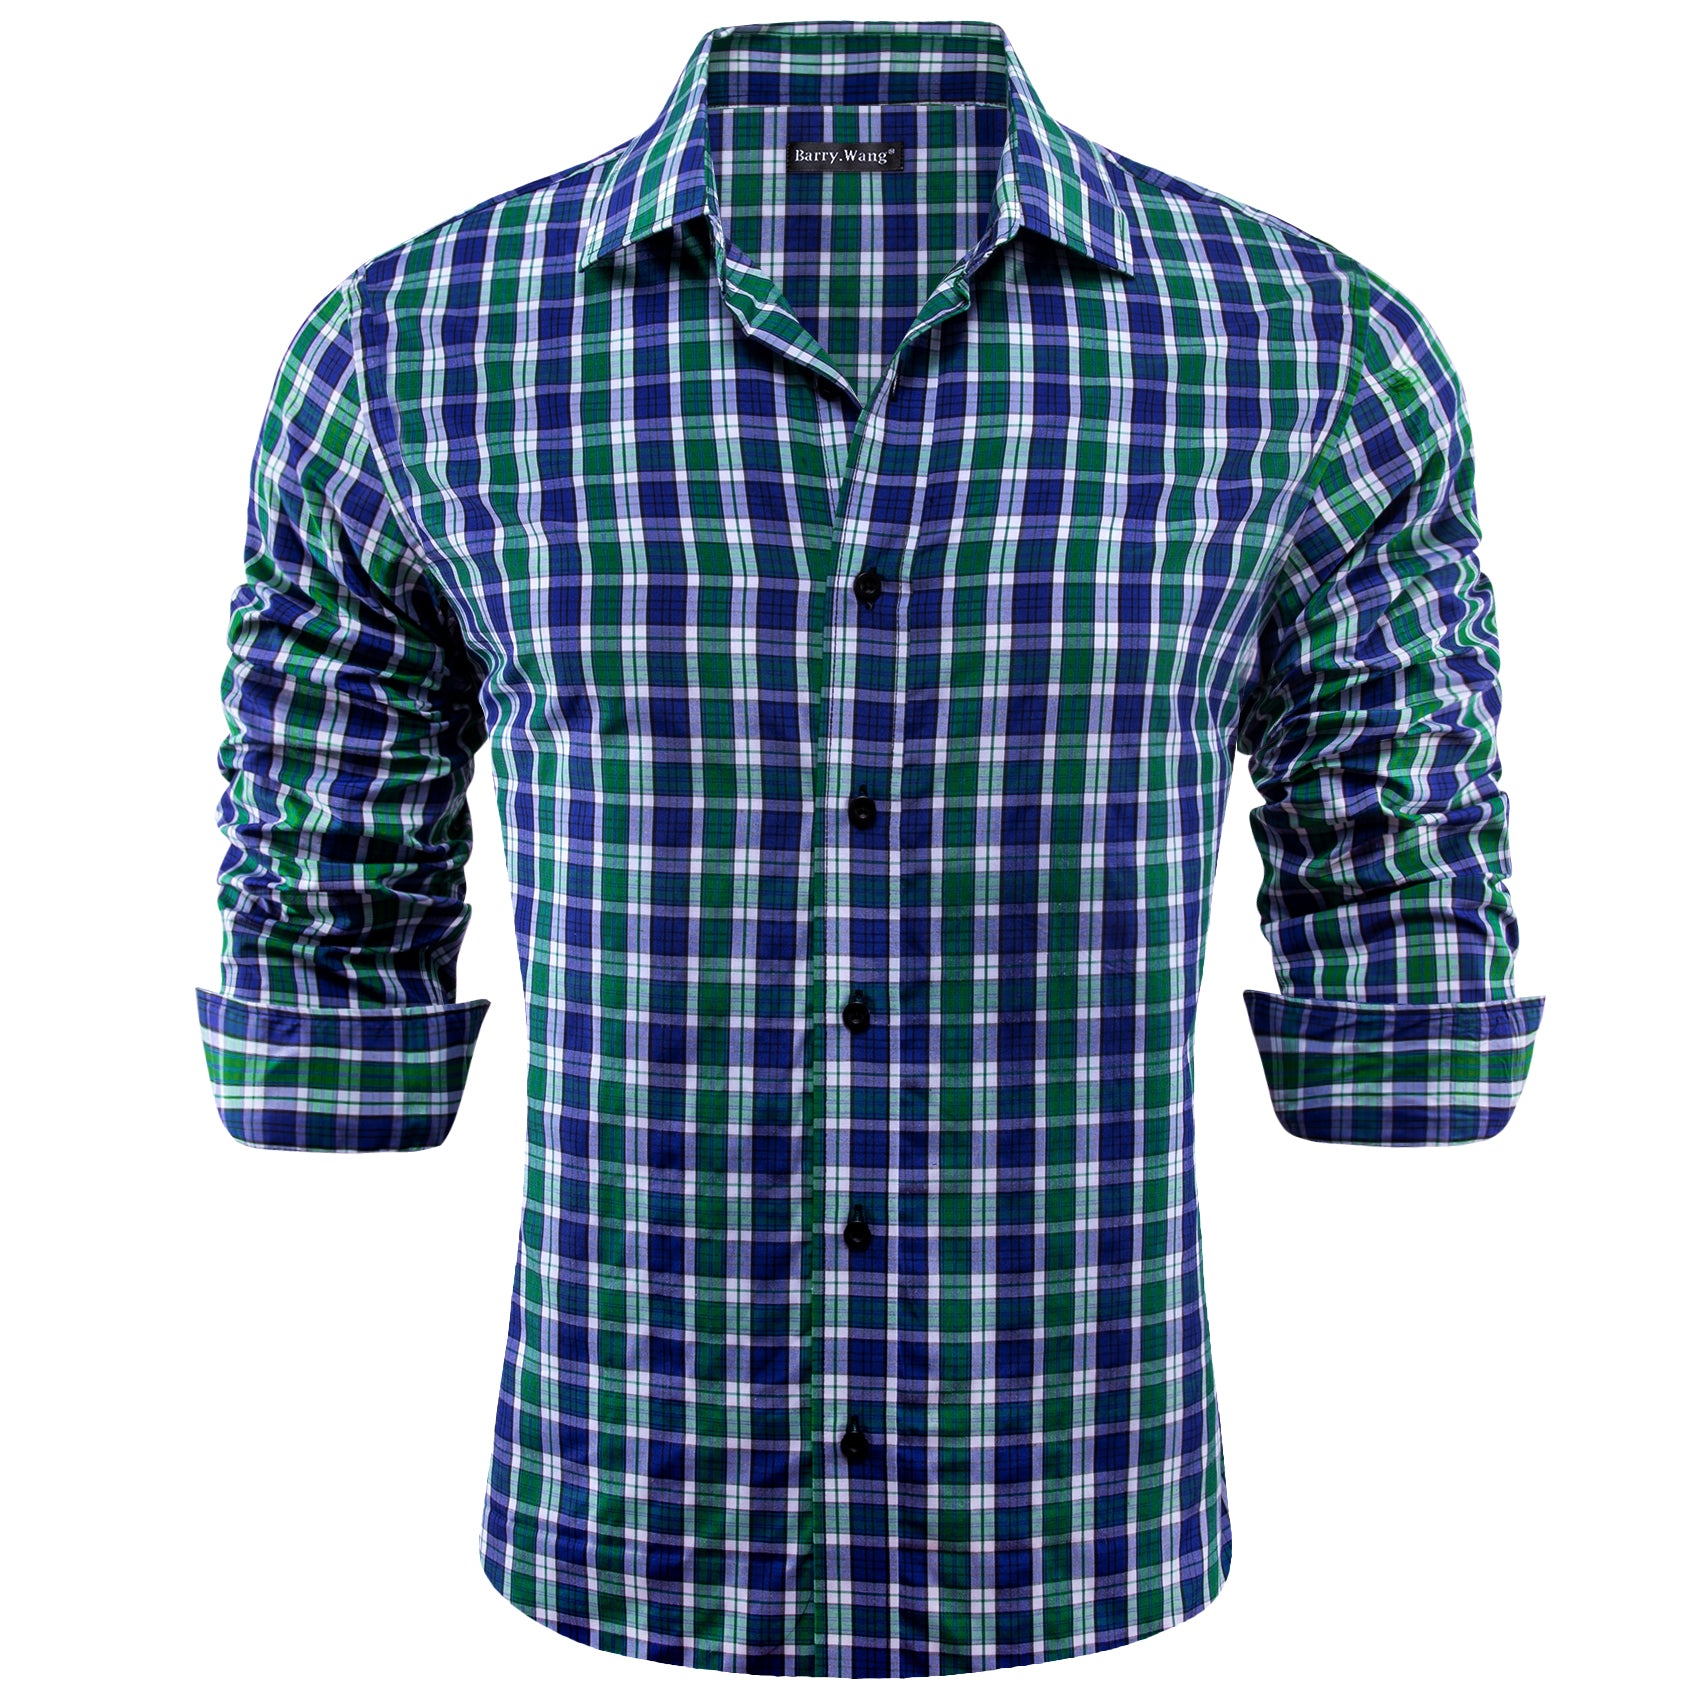 Barry.wang Blue Green Plaid Men's Shirt